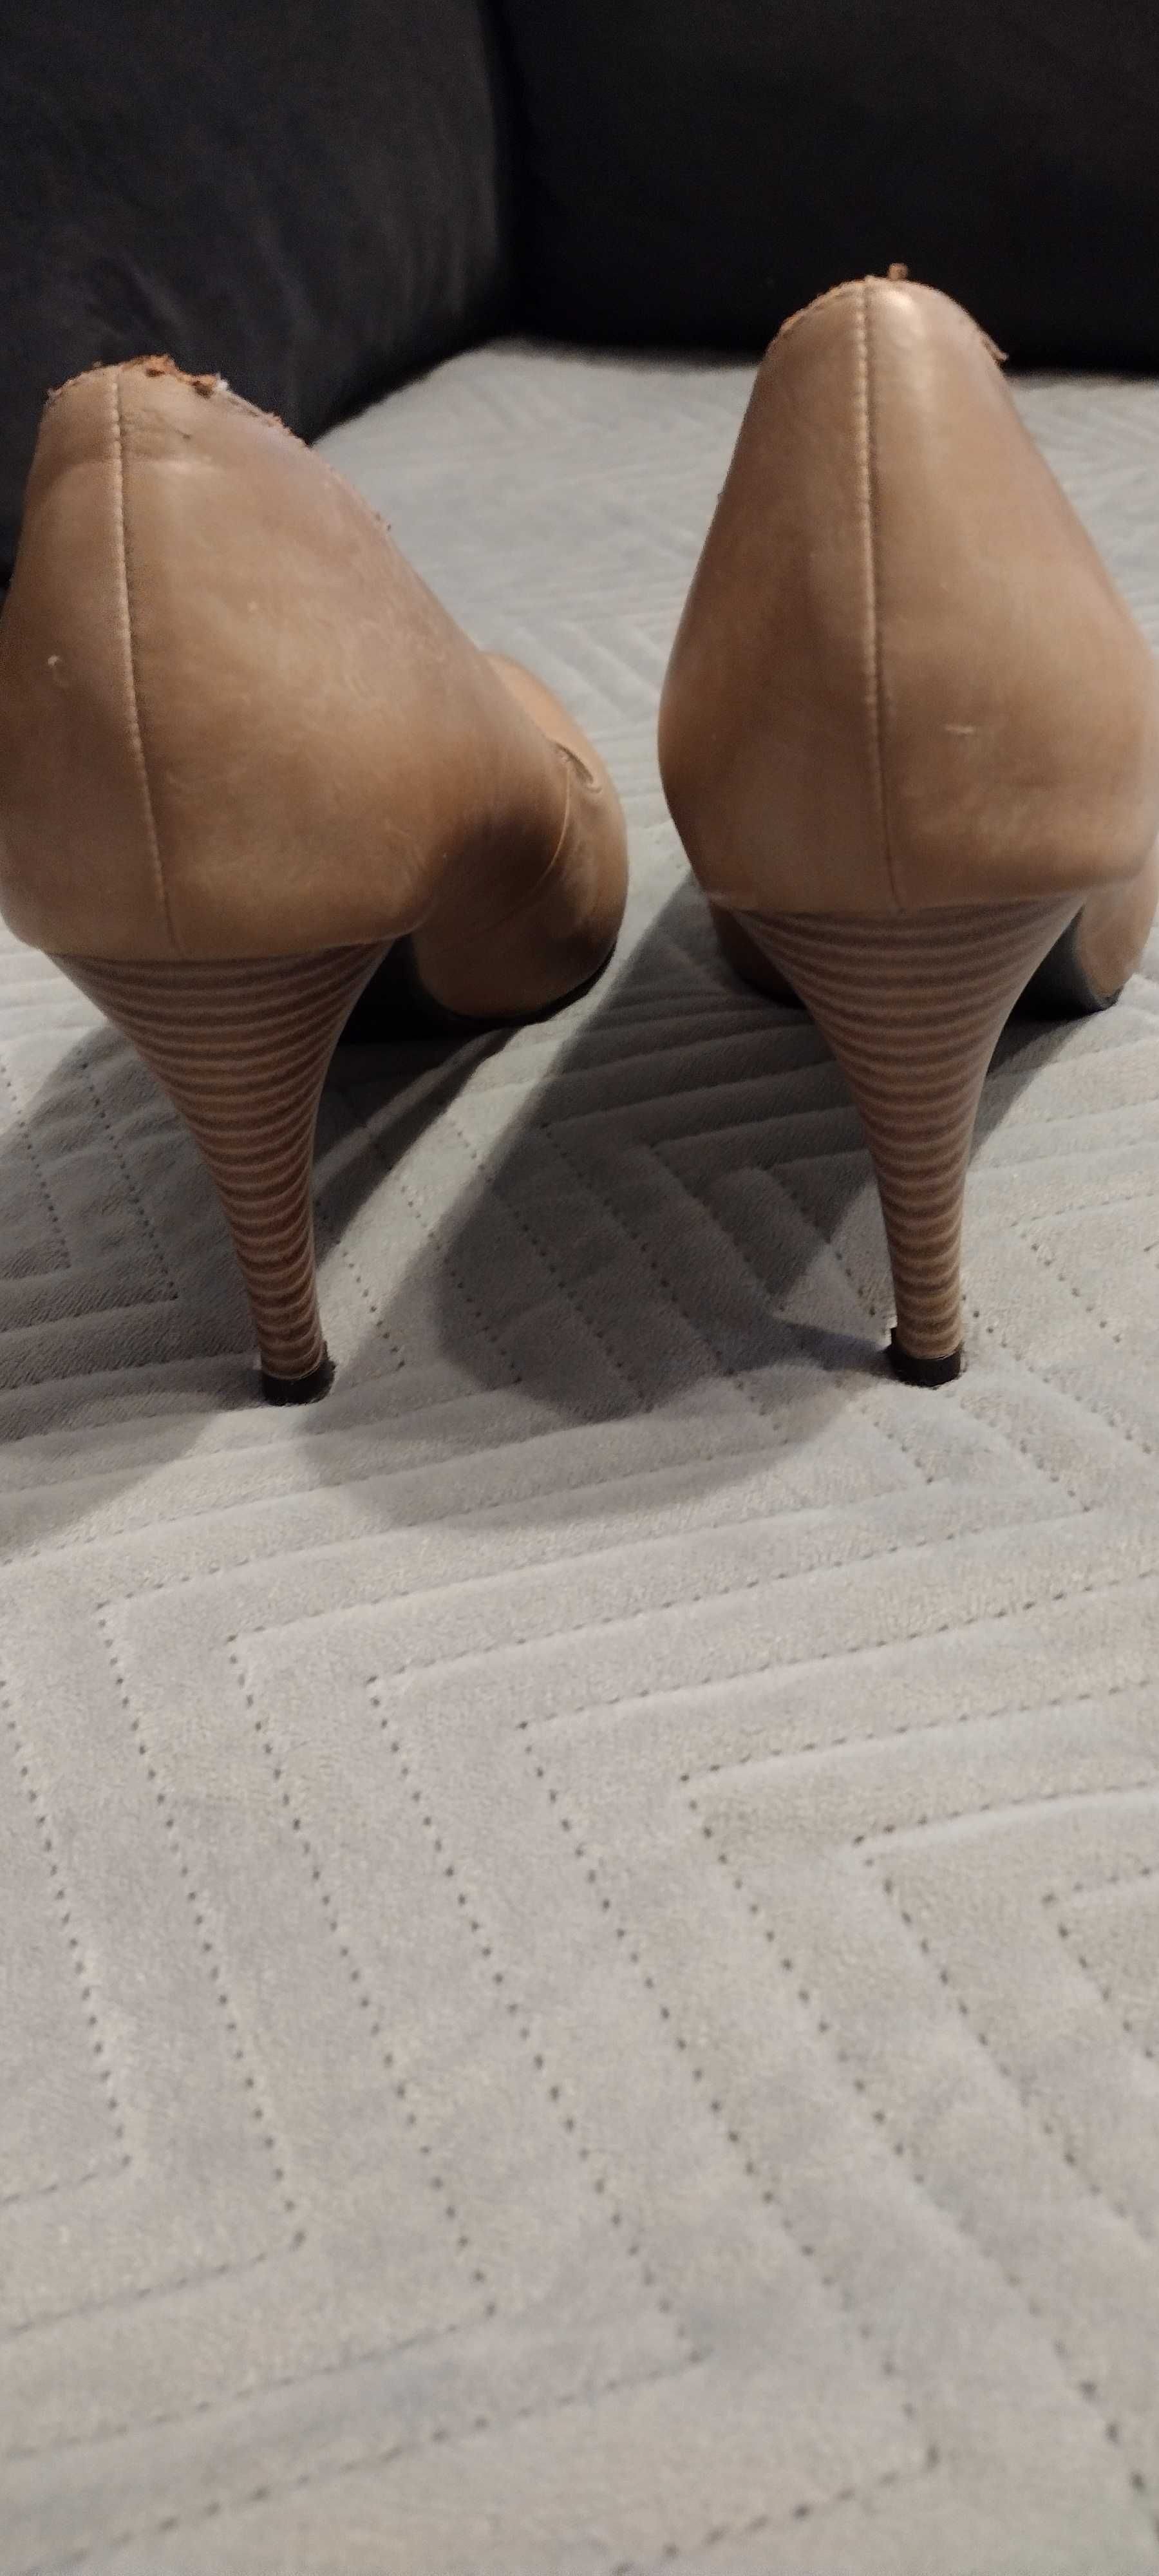 Buty obcas beżowe 40 rozmiar damskie morano